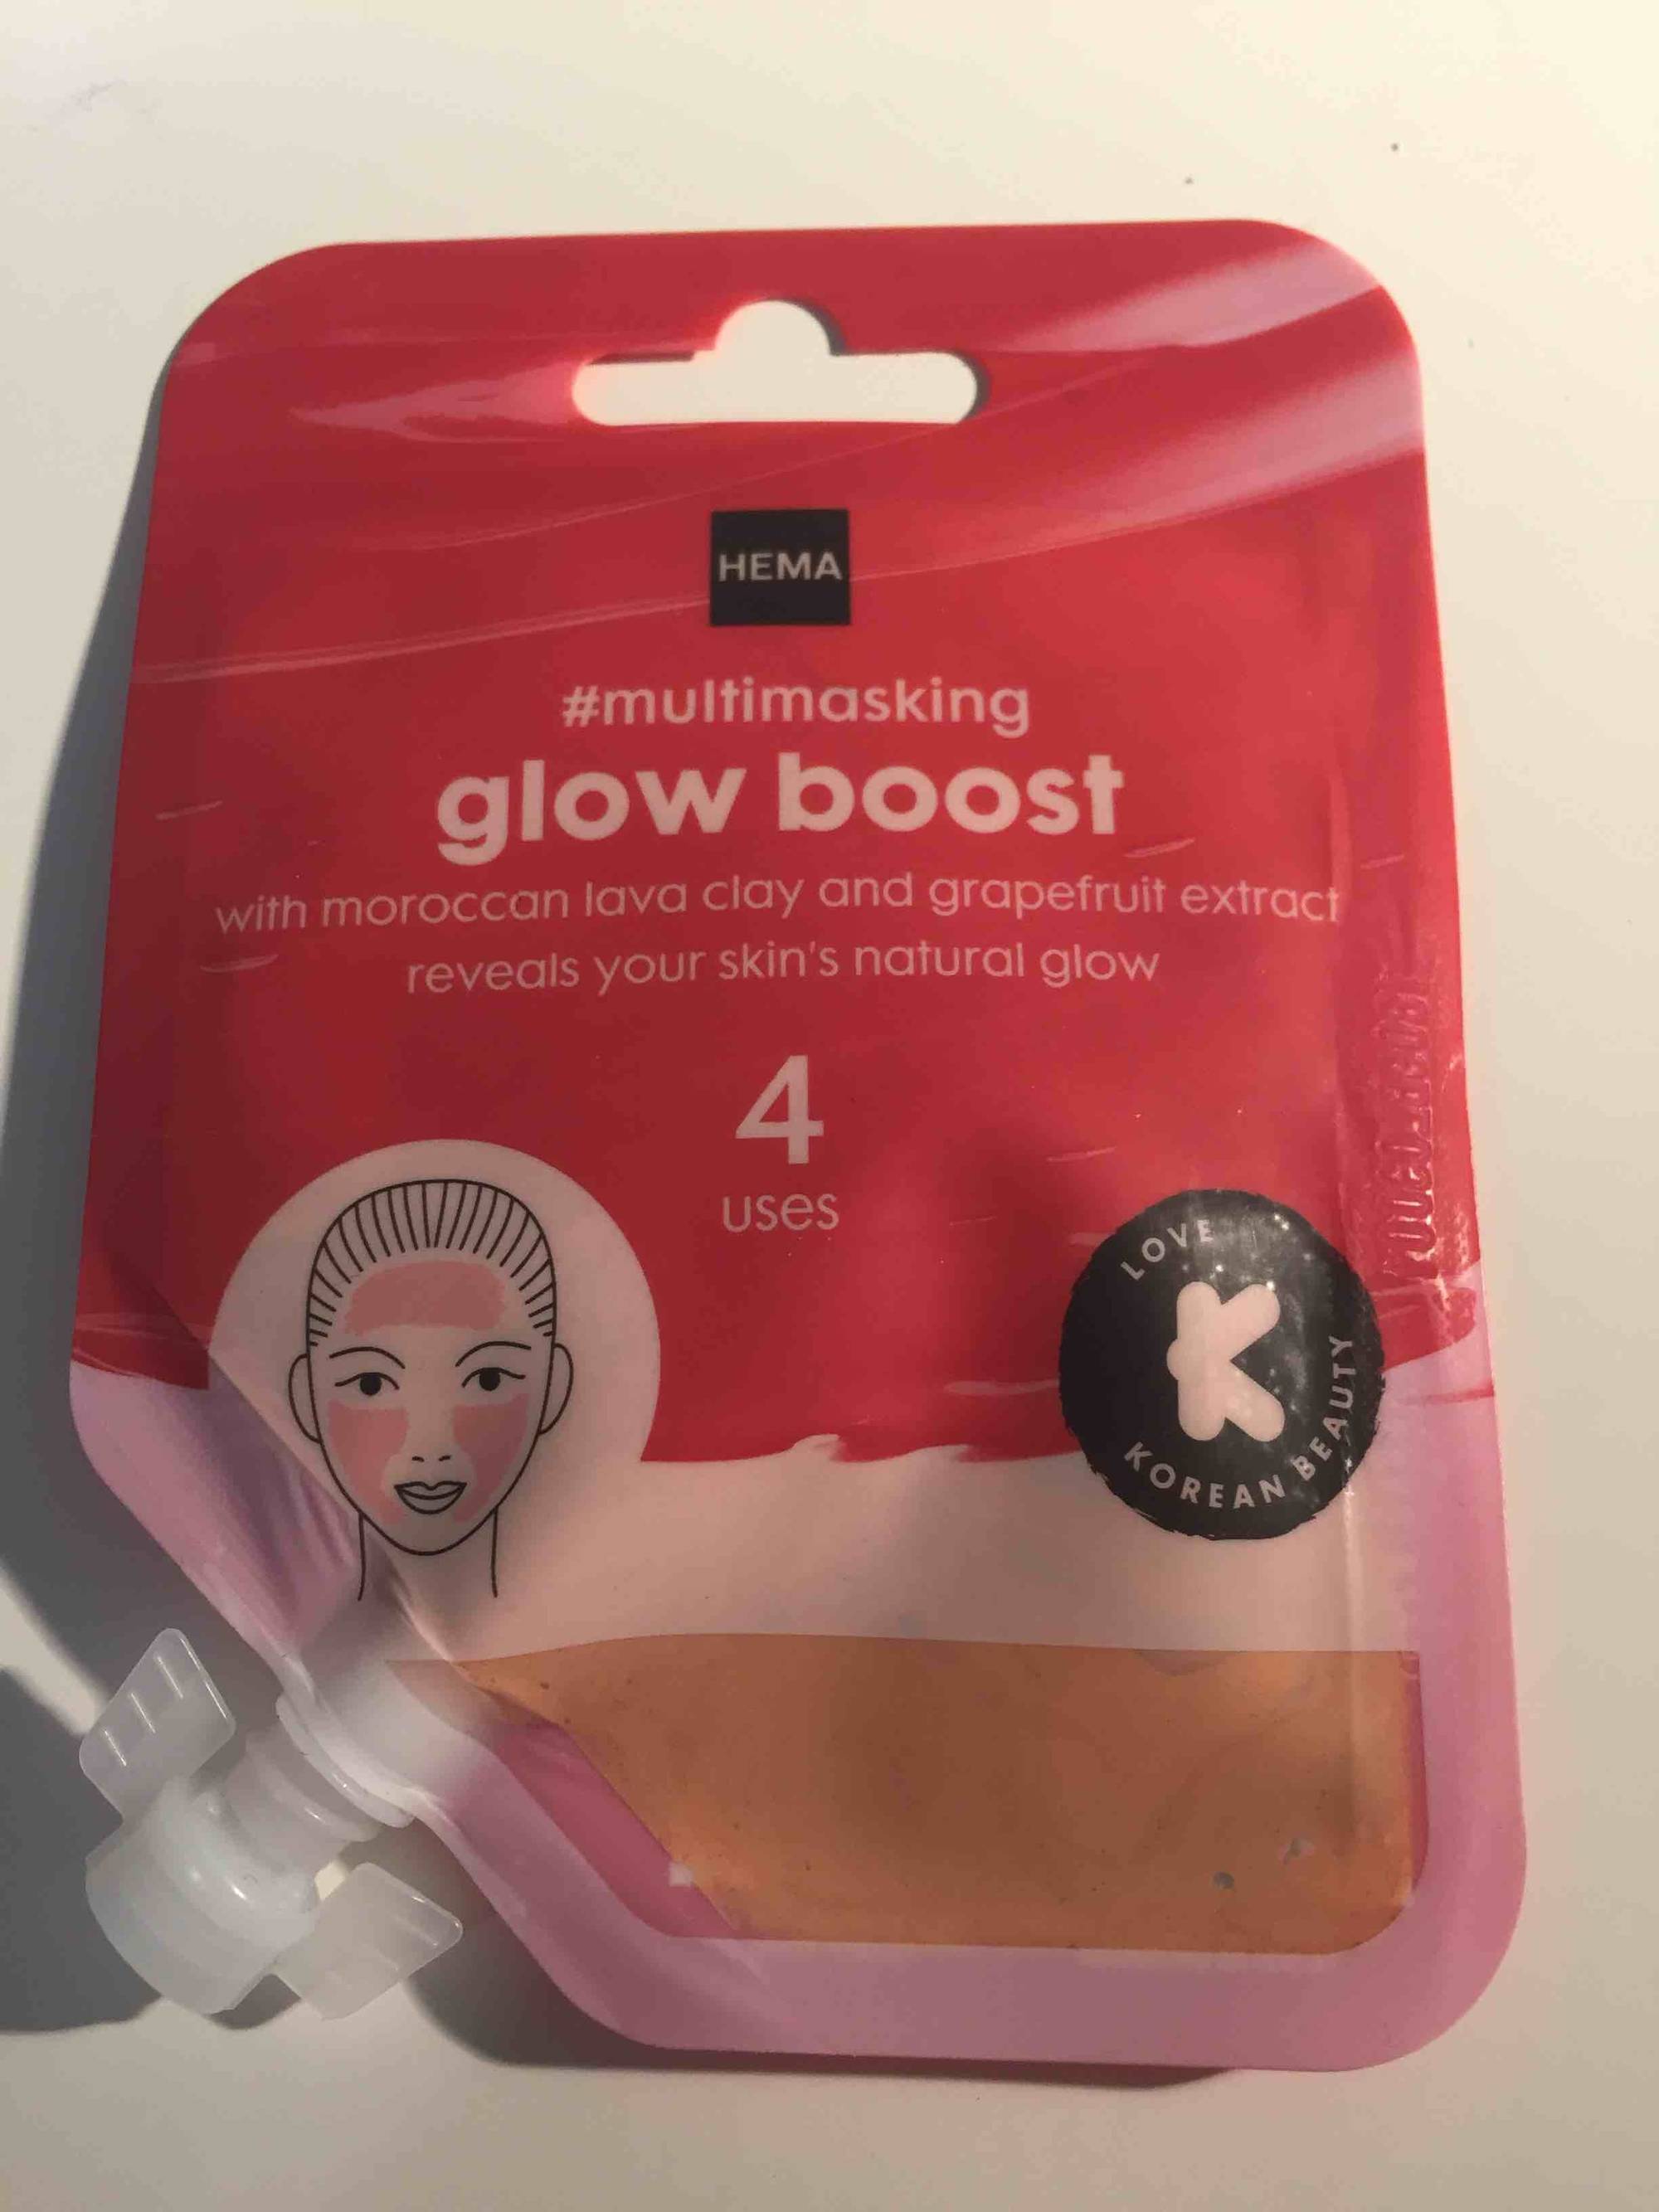 HEMA - Glow boost - Multimasking